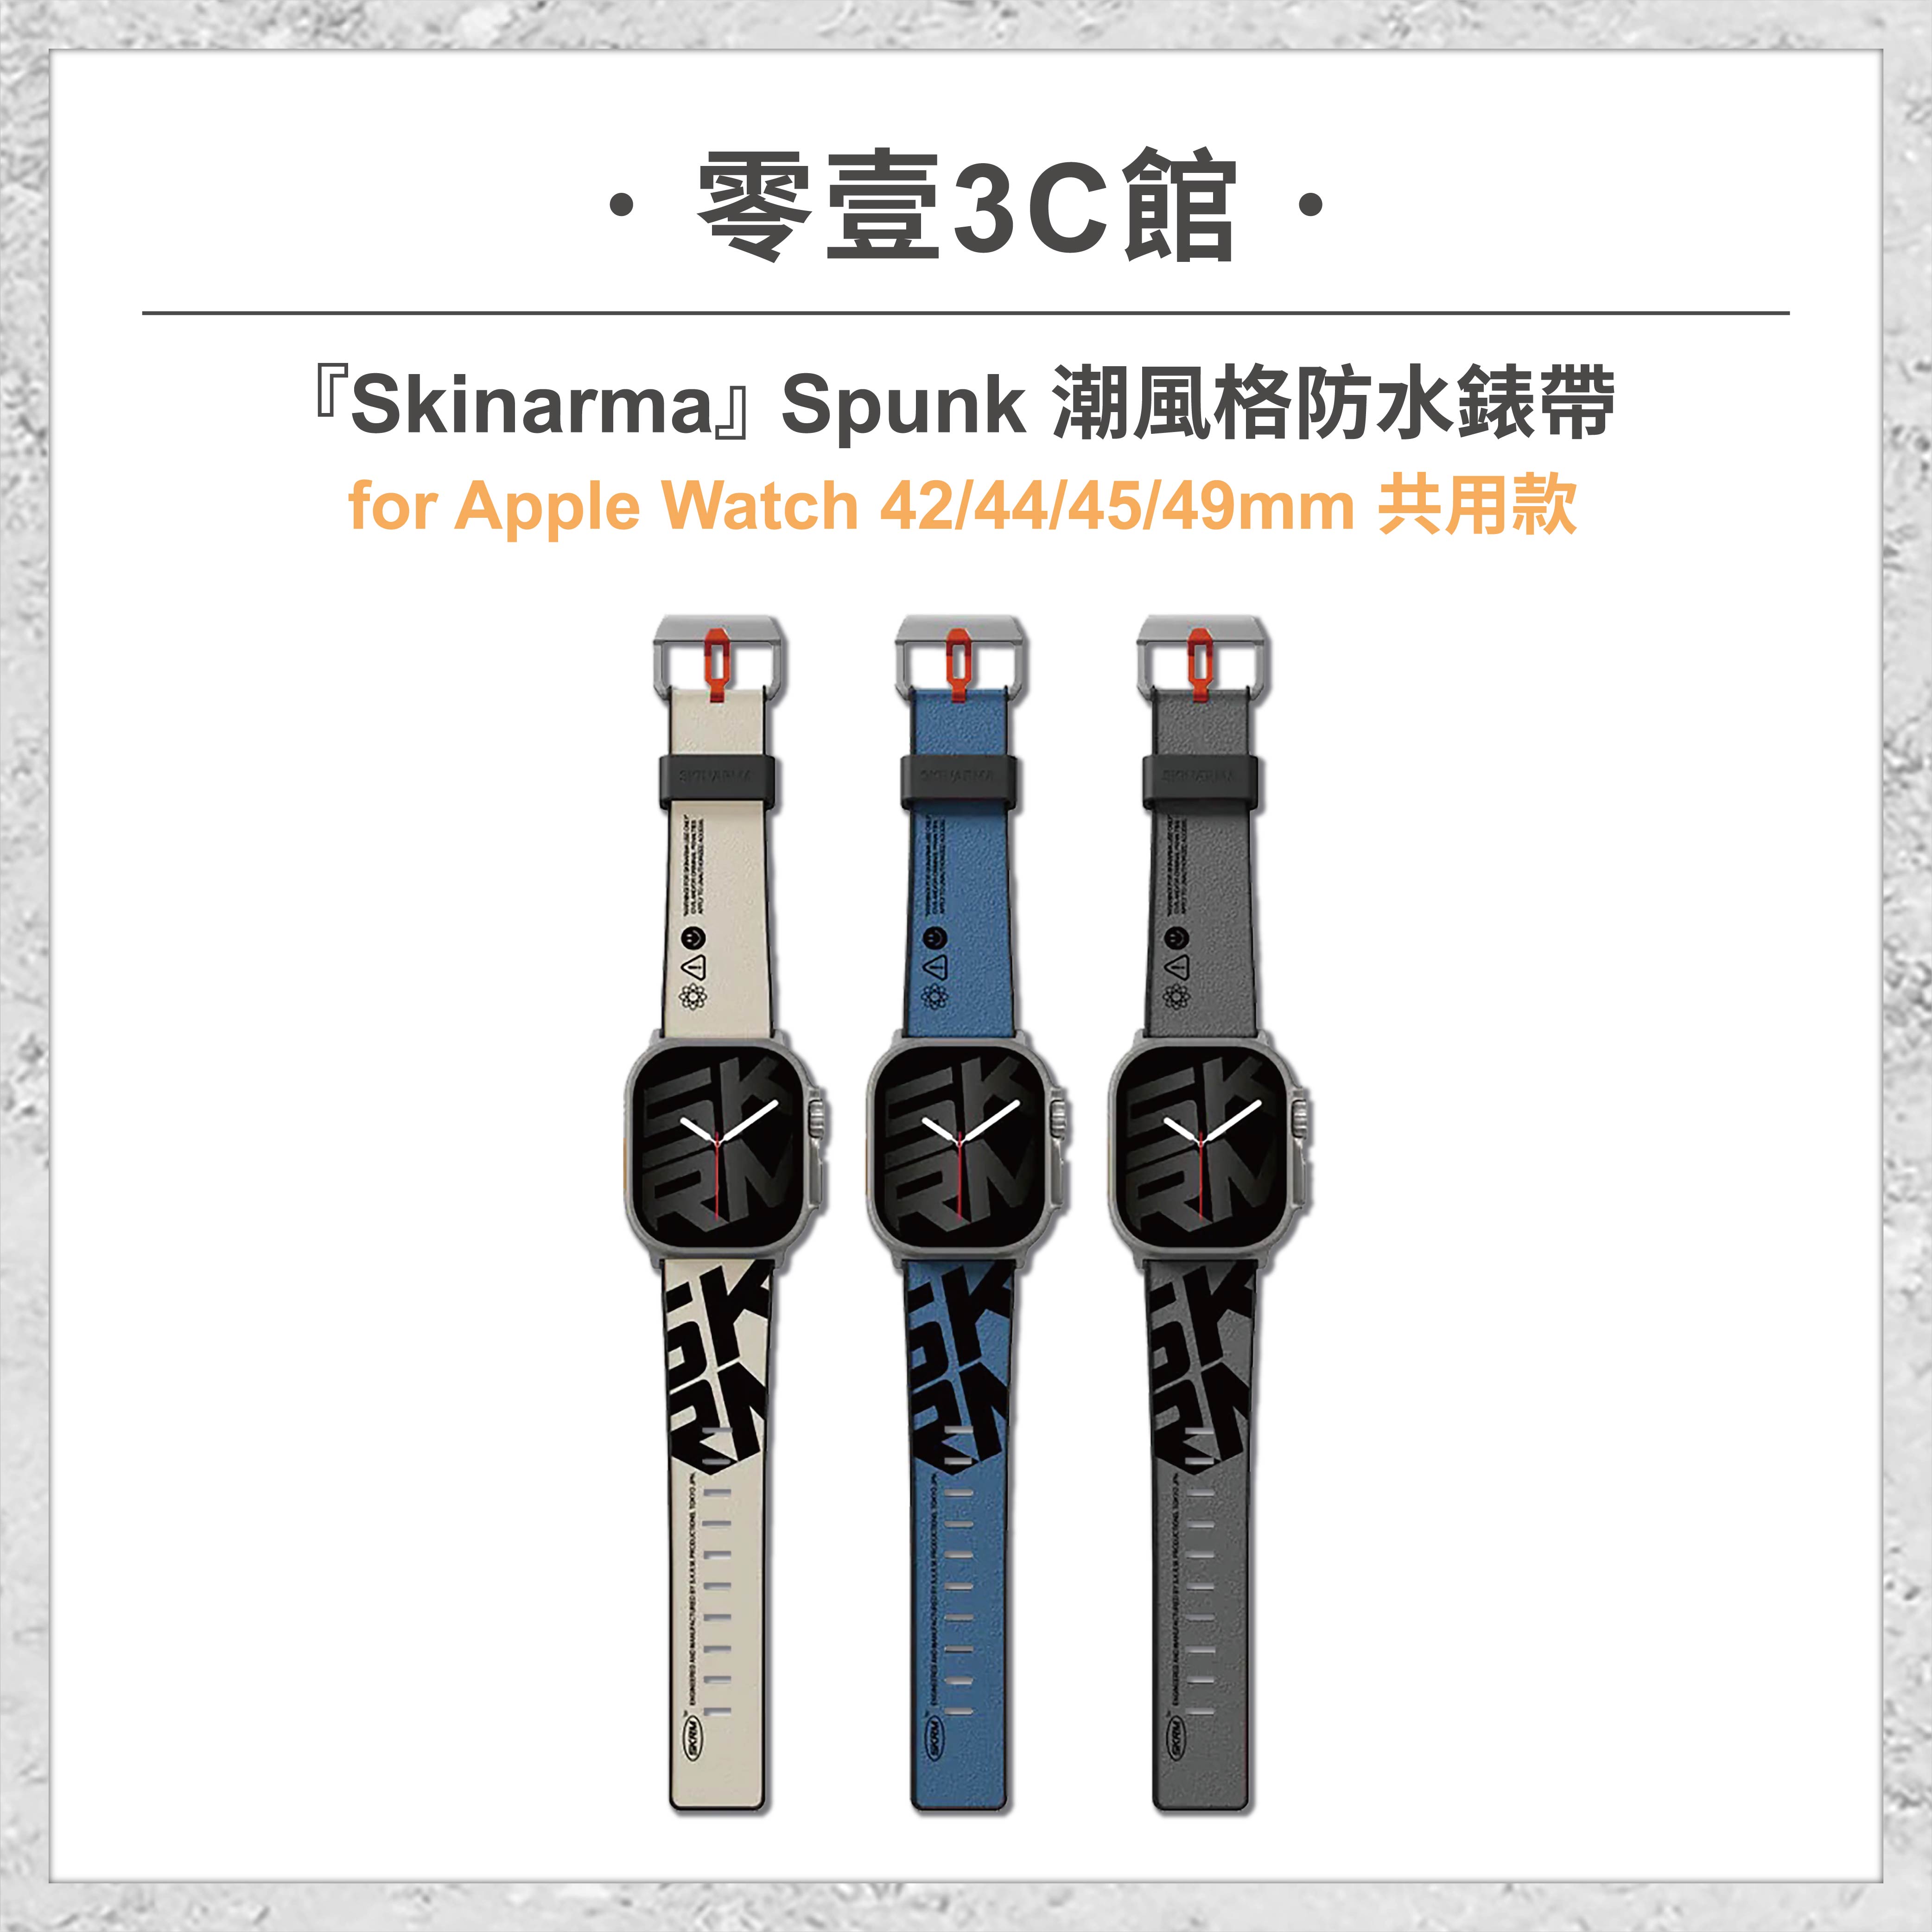 『Skinarma』Spunk 潮風格防水錶帶(42/44/45/49mm共用款)for Apple Watch手錶錶帶